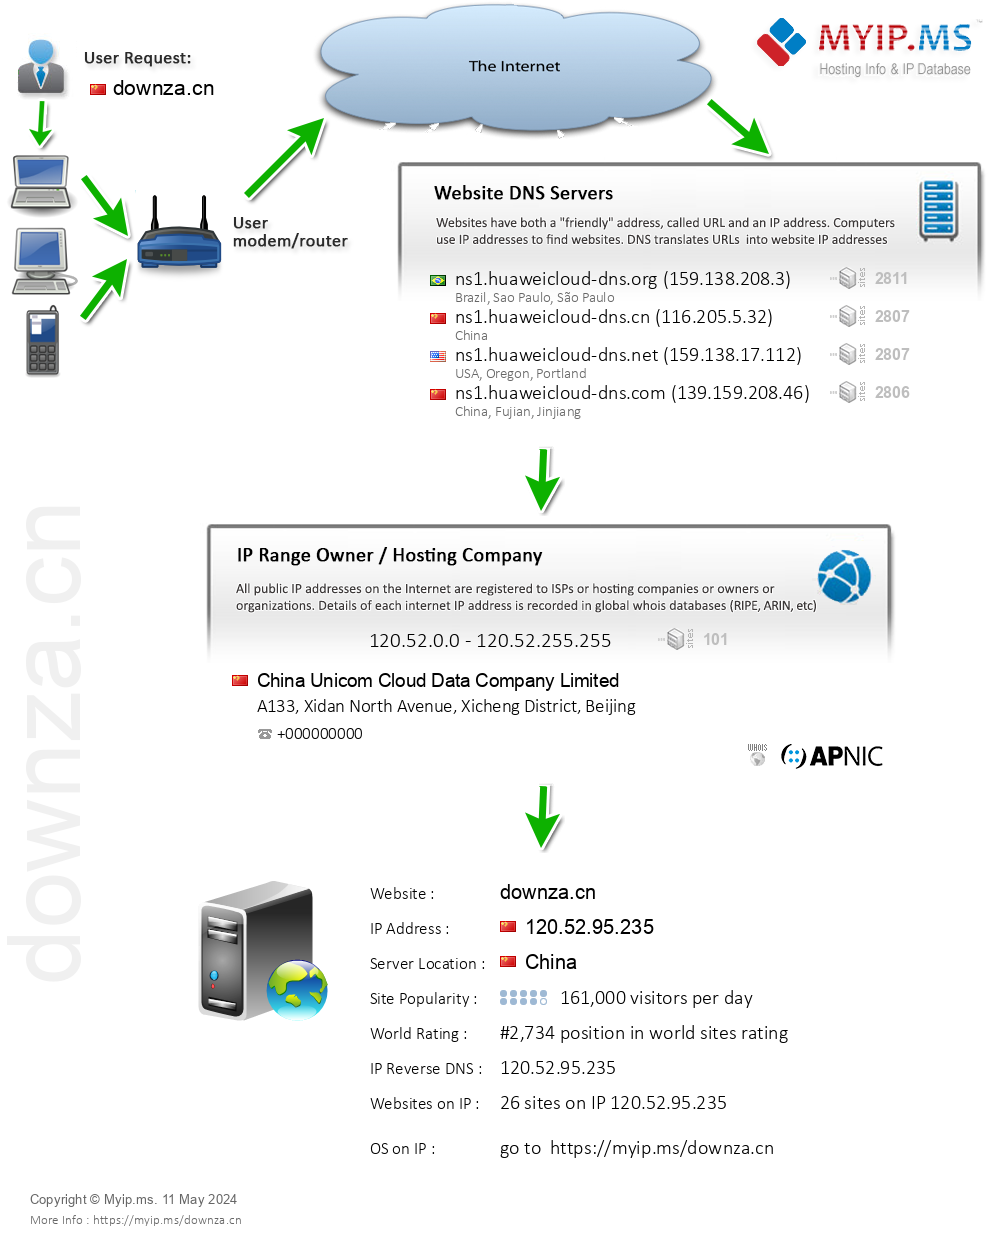 Downza.cn - Website Hosting Visual IP Diagram